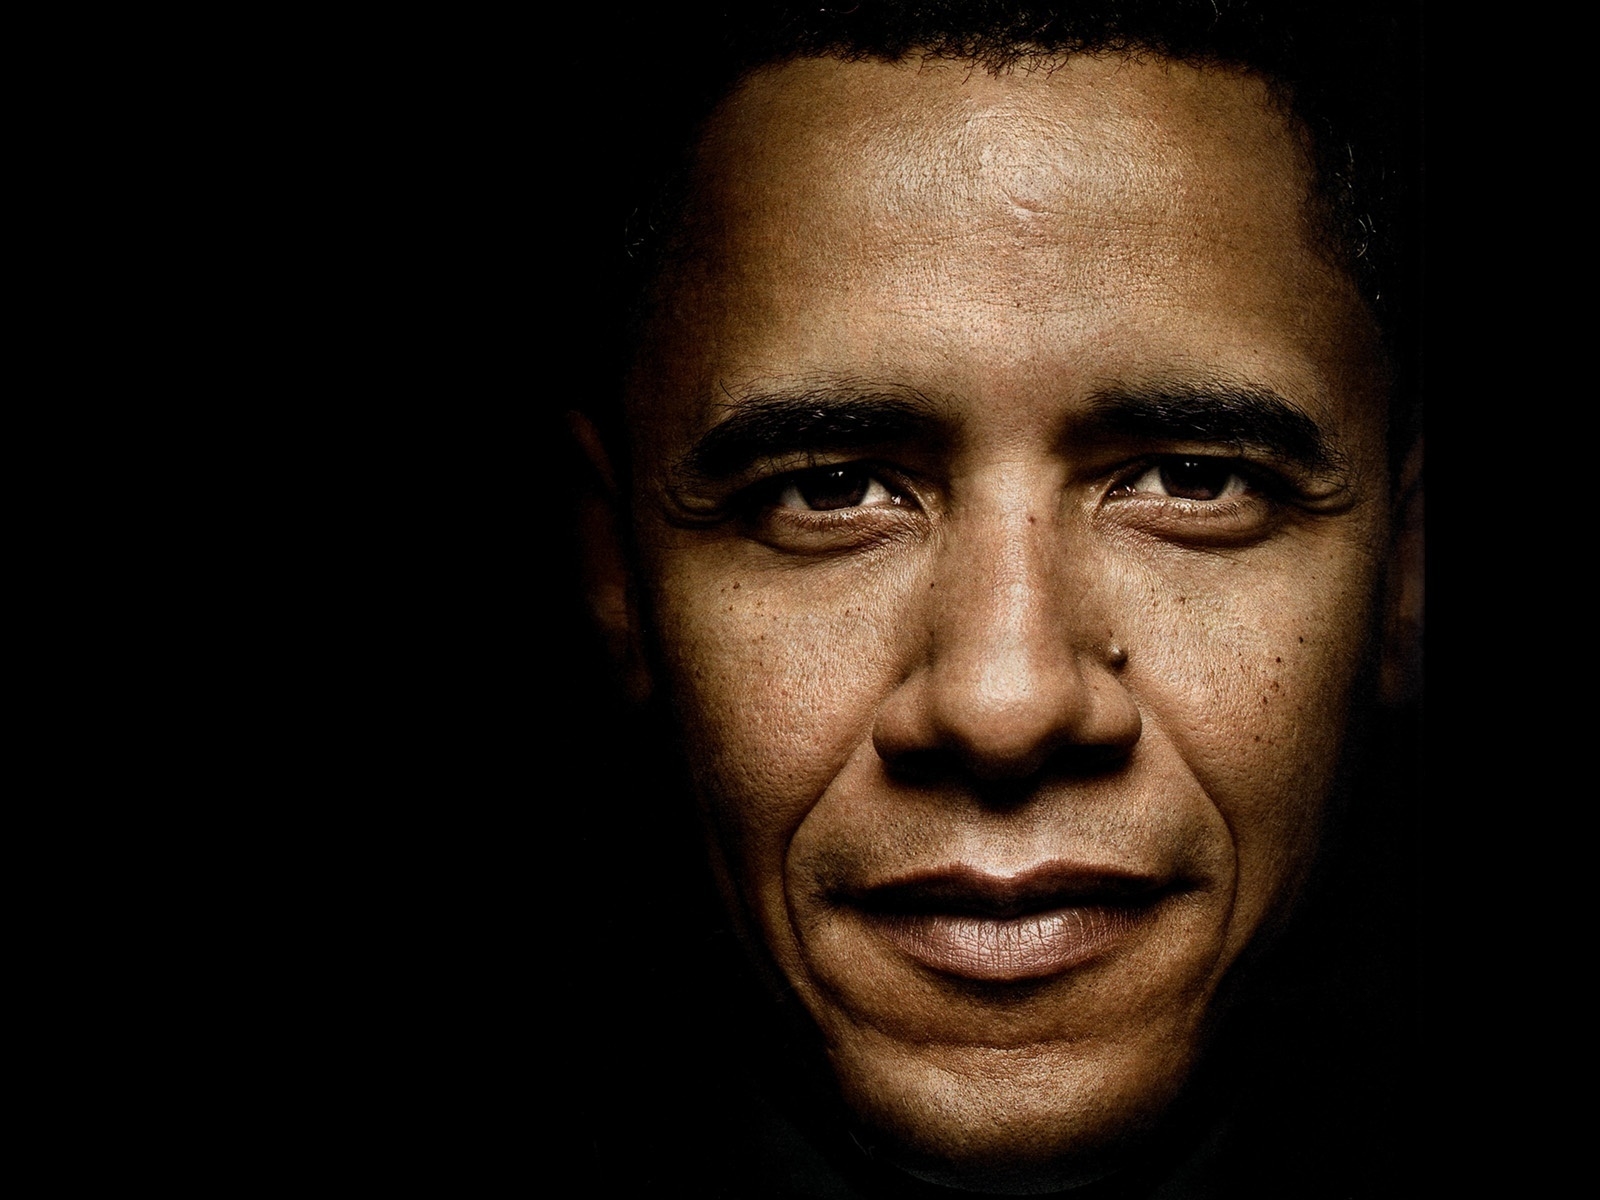 Barack Obama Close Up for 1600 x 1200 resolution